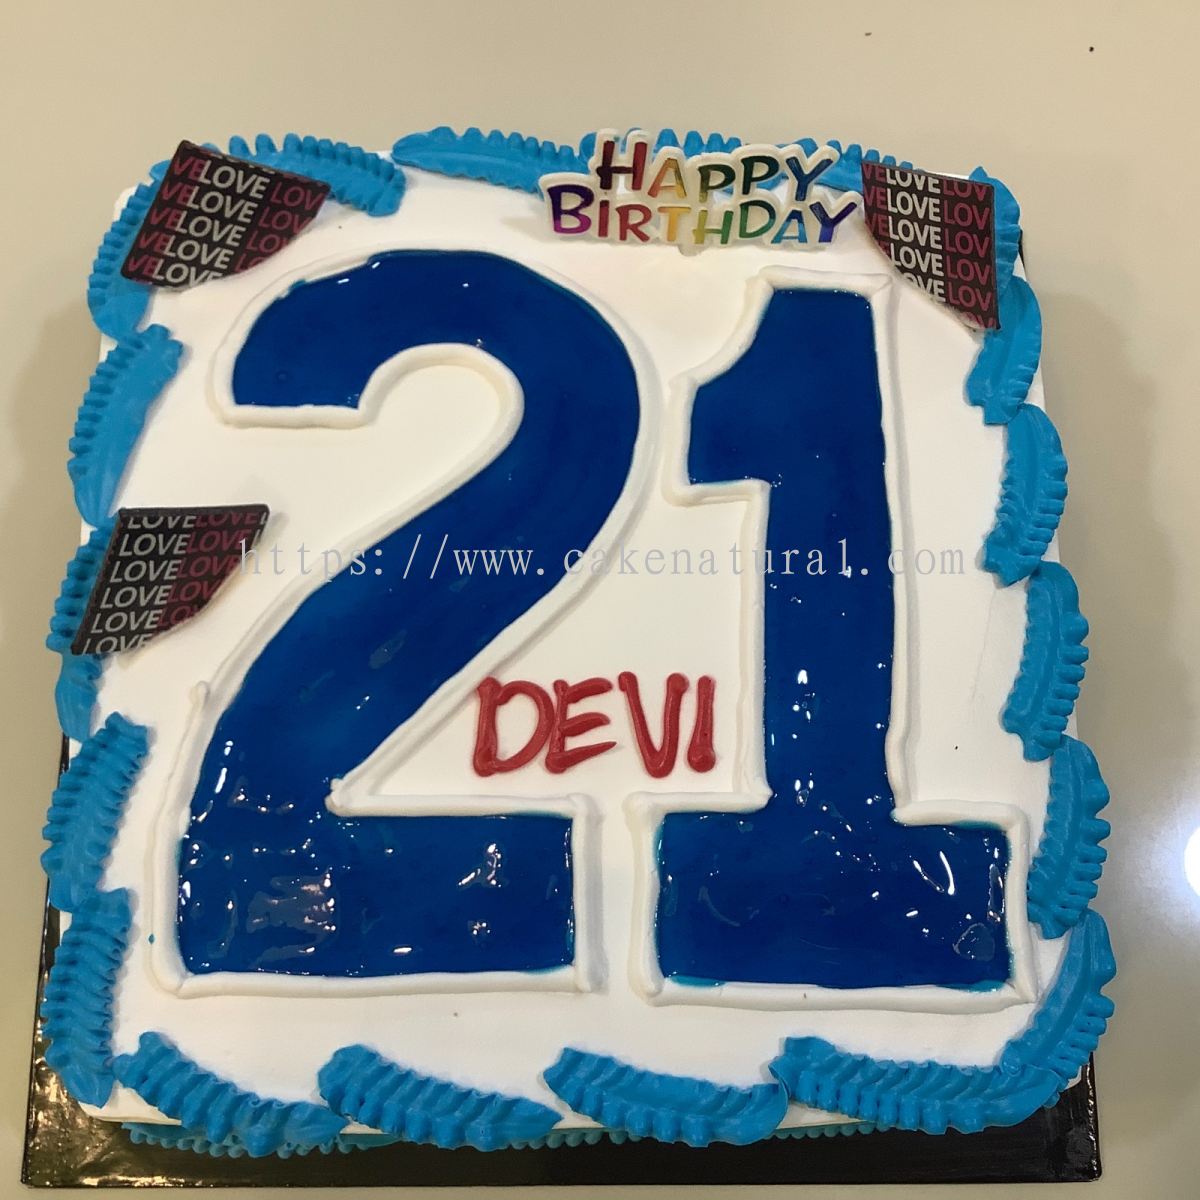 Download Happy Birthday card Devi free.